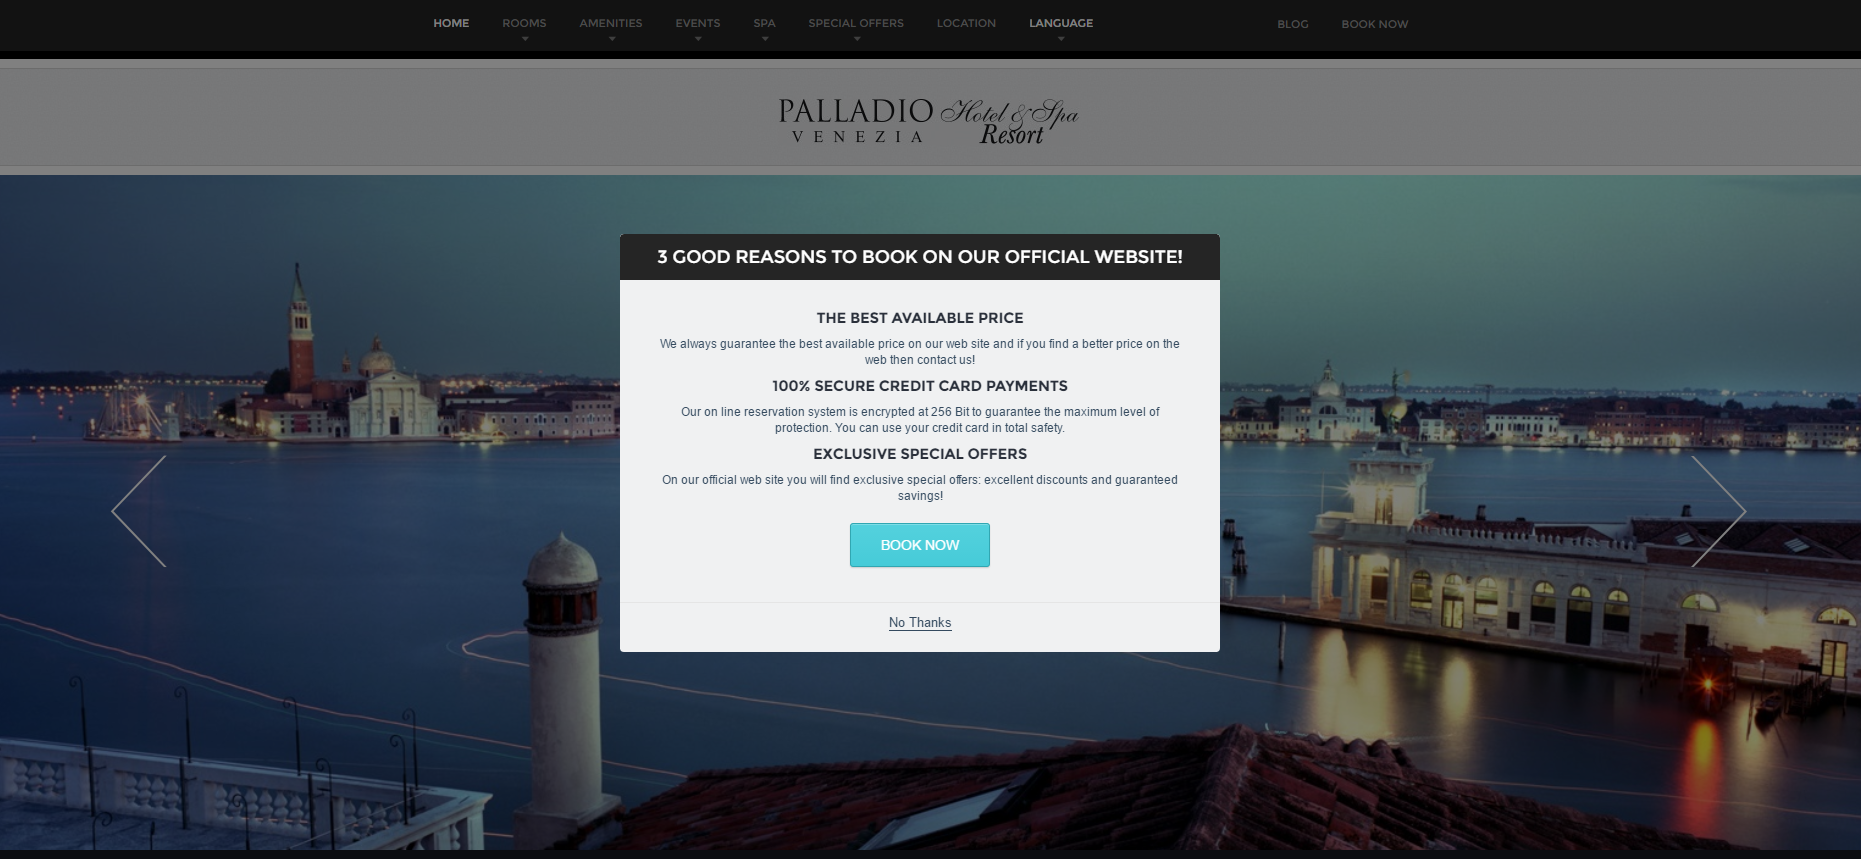 The Palladio hotel website homepage